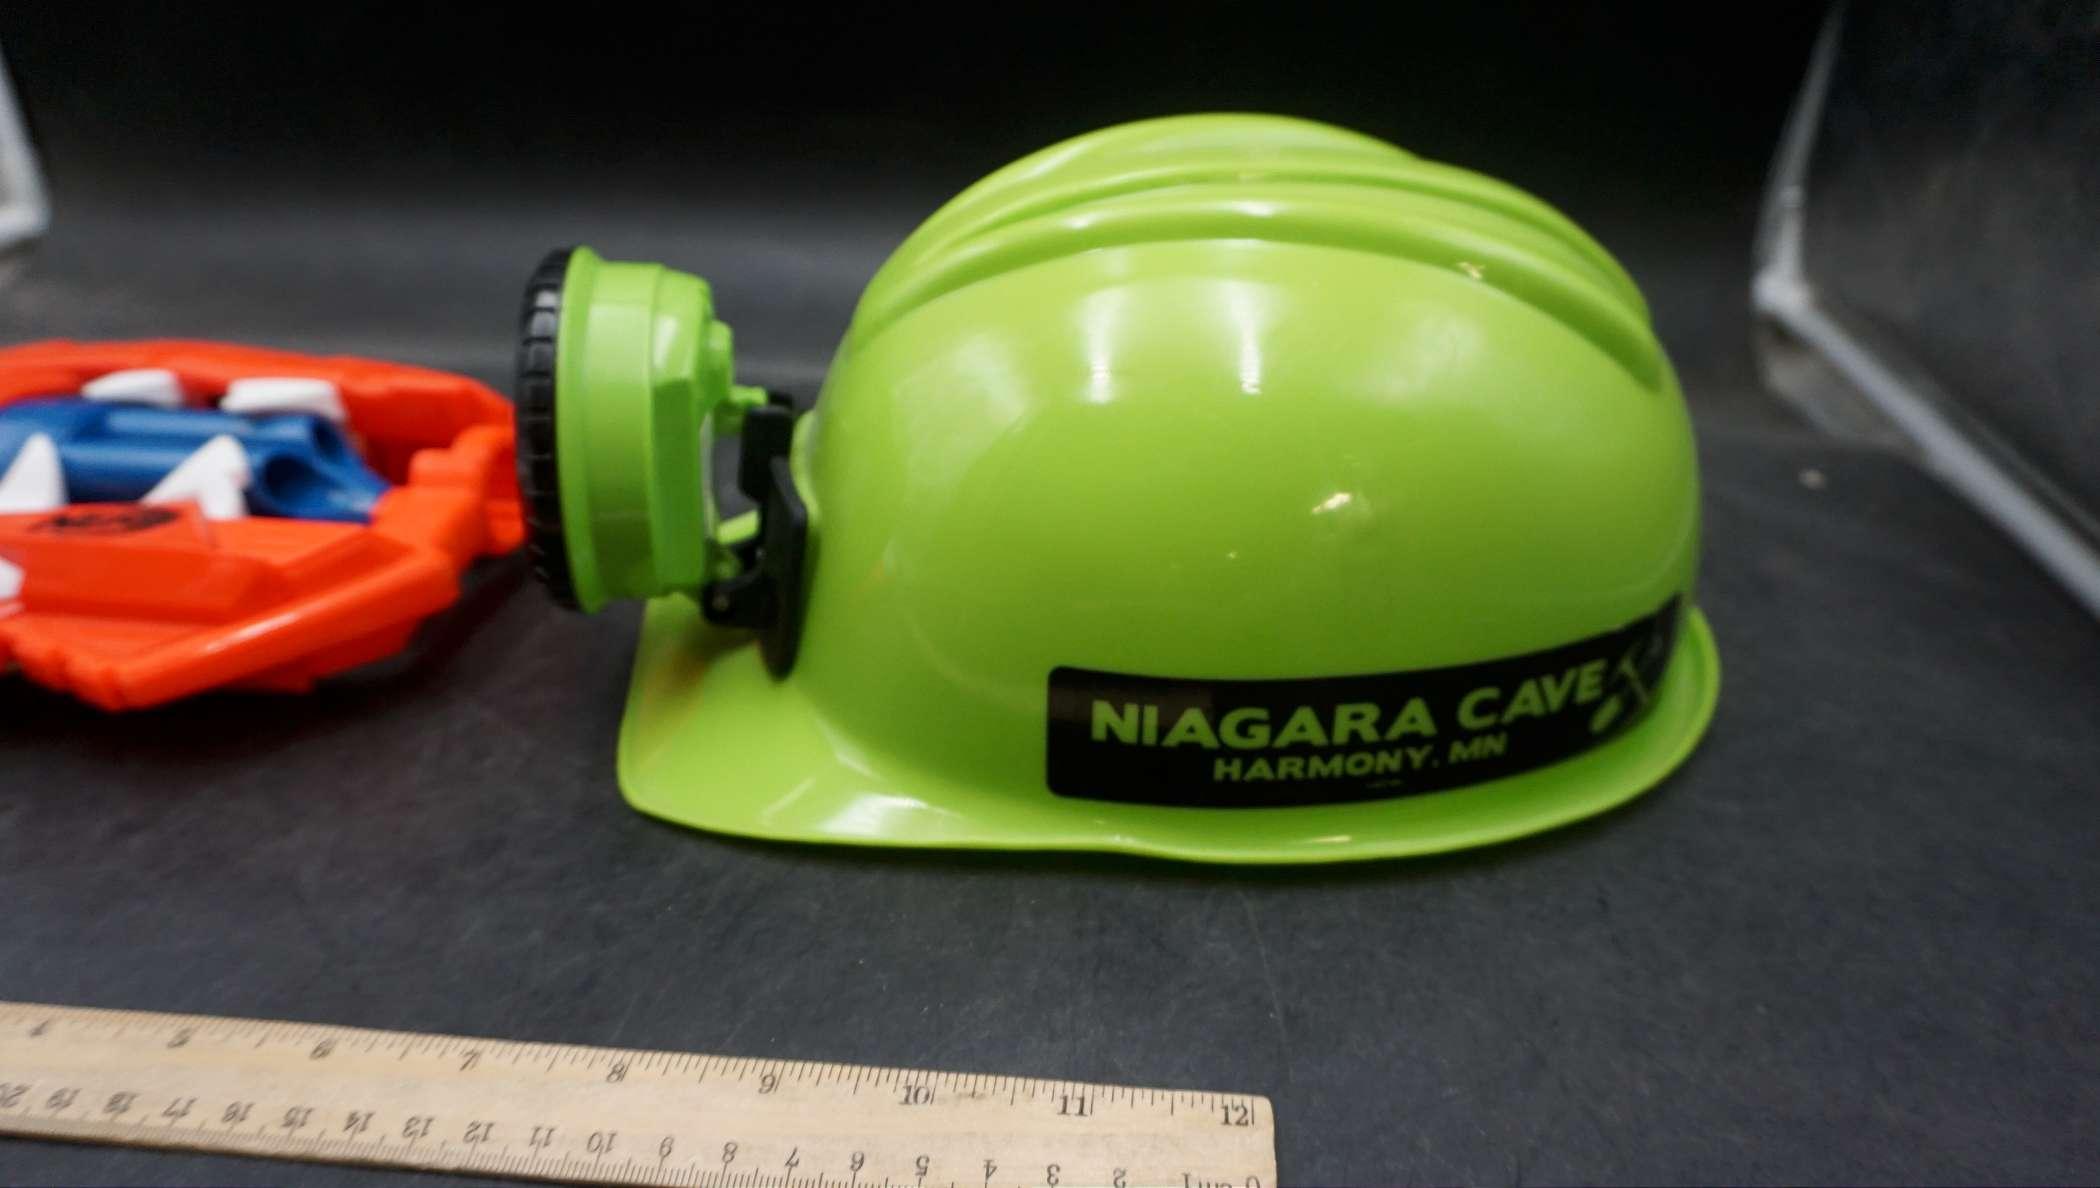 Niagara Cave - Harmony, Mn Helmet & Nerf Gun